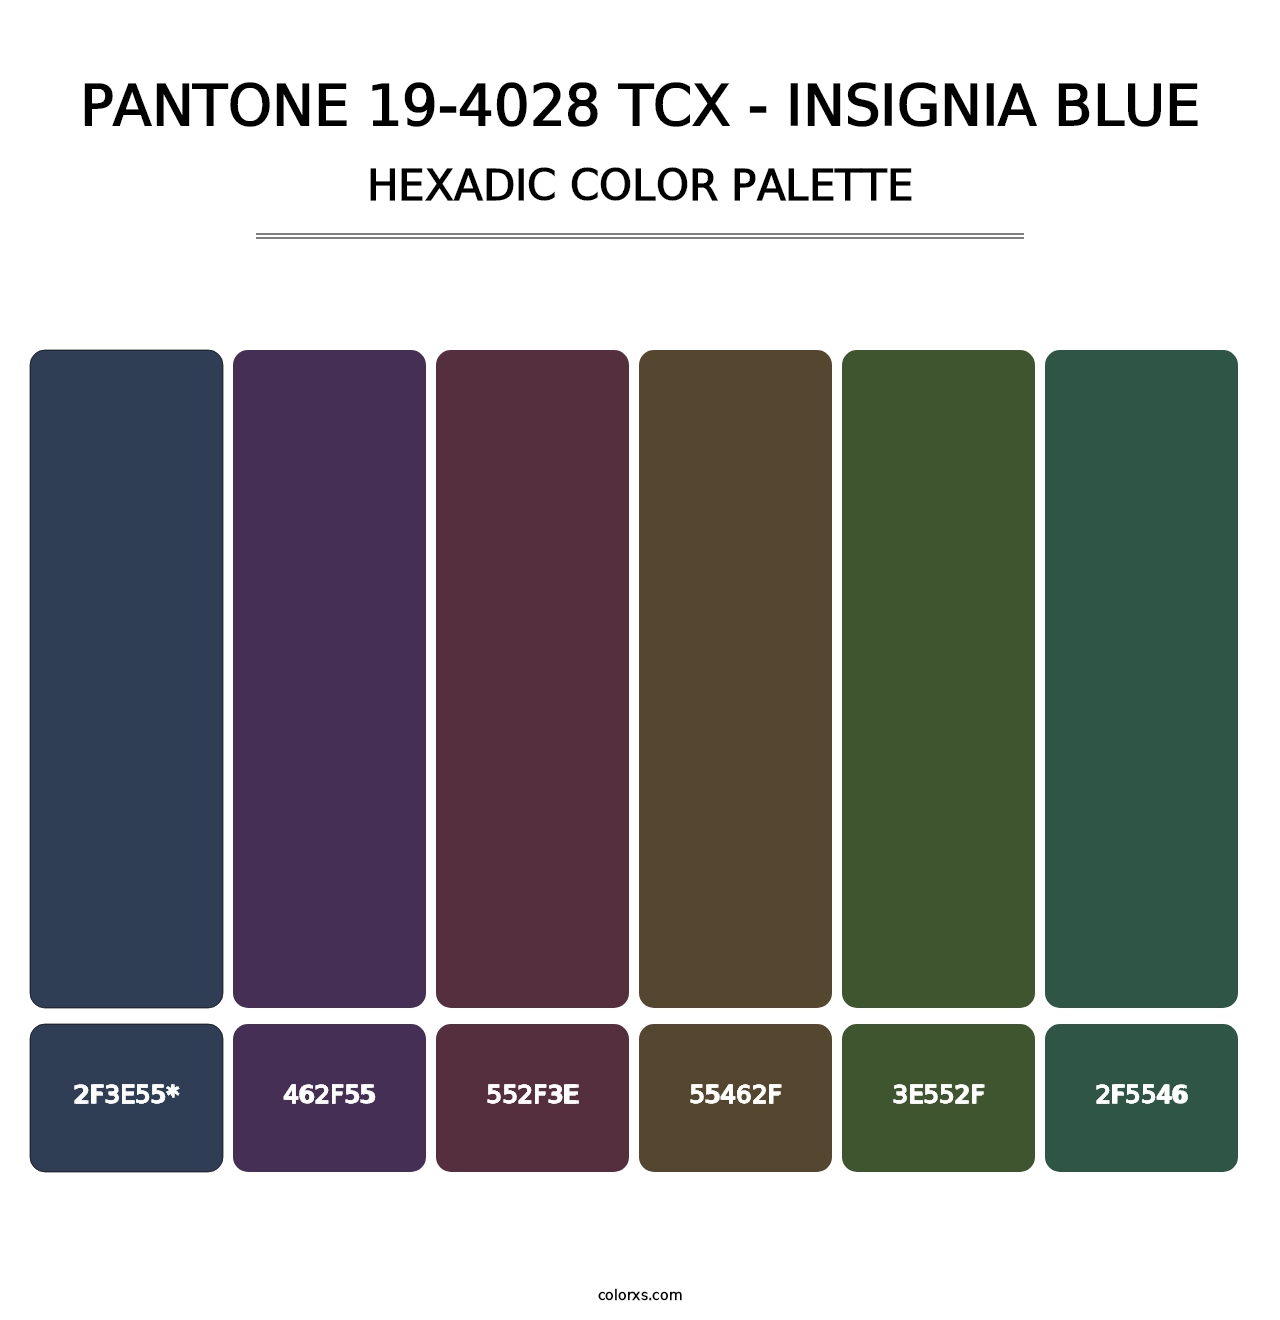 PANTONE 19-4028 TCX - Insignia Blue - Hexadic Color Palette